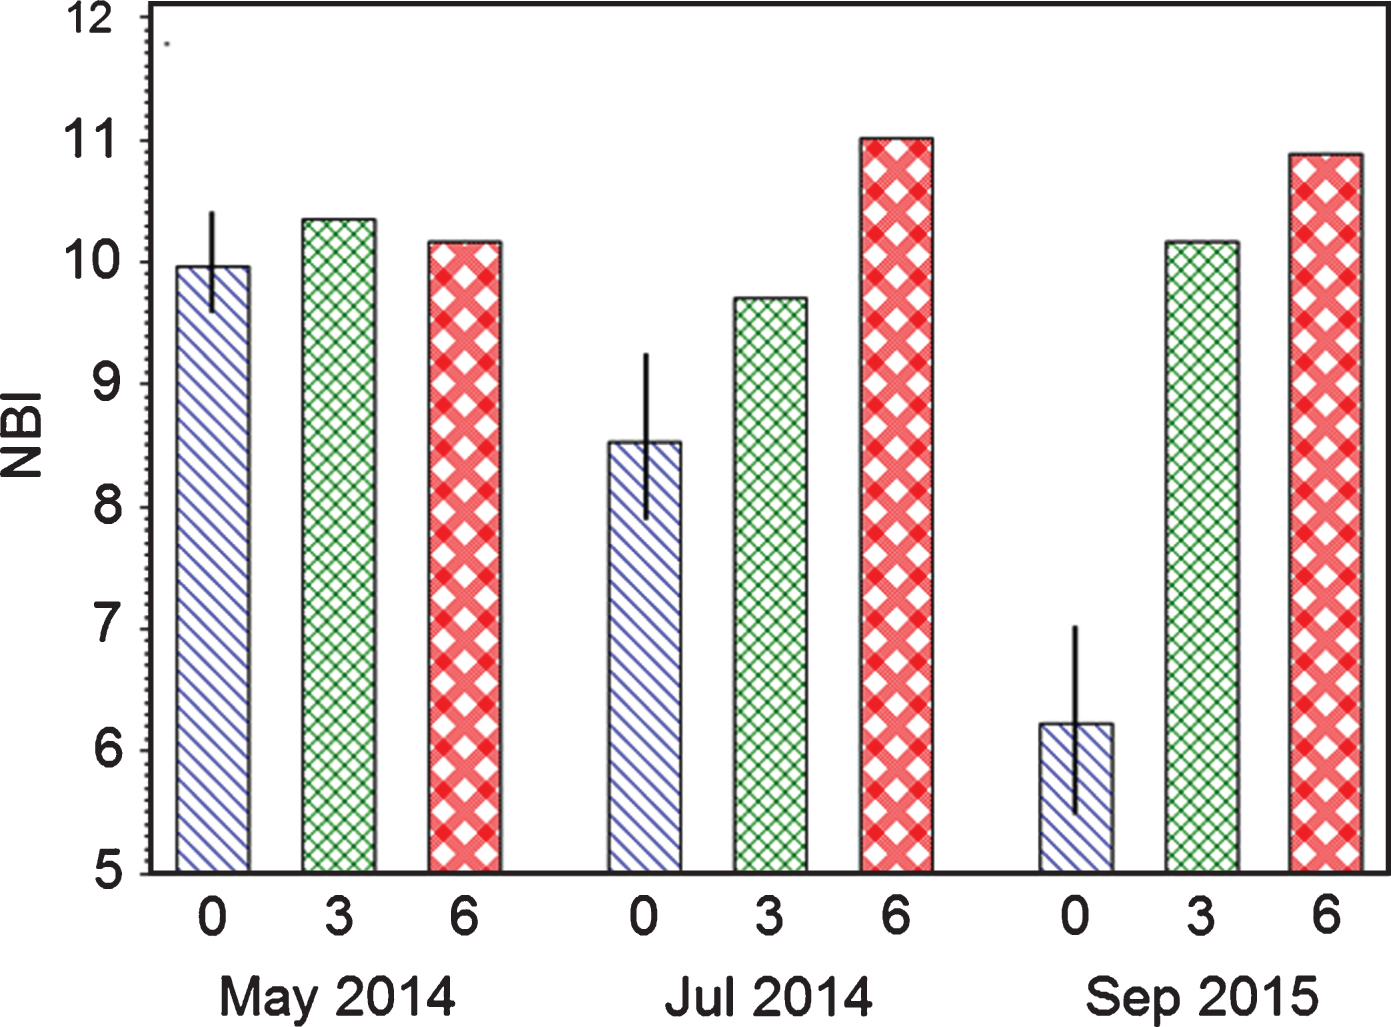 NBI index of strawberry leaves in two years influenced by three fertilization levels (Control = 0, II = 3 g N m–2, III = 6 g N m–2) as average of three cultivars.